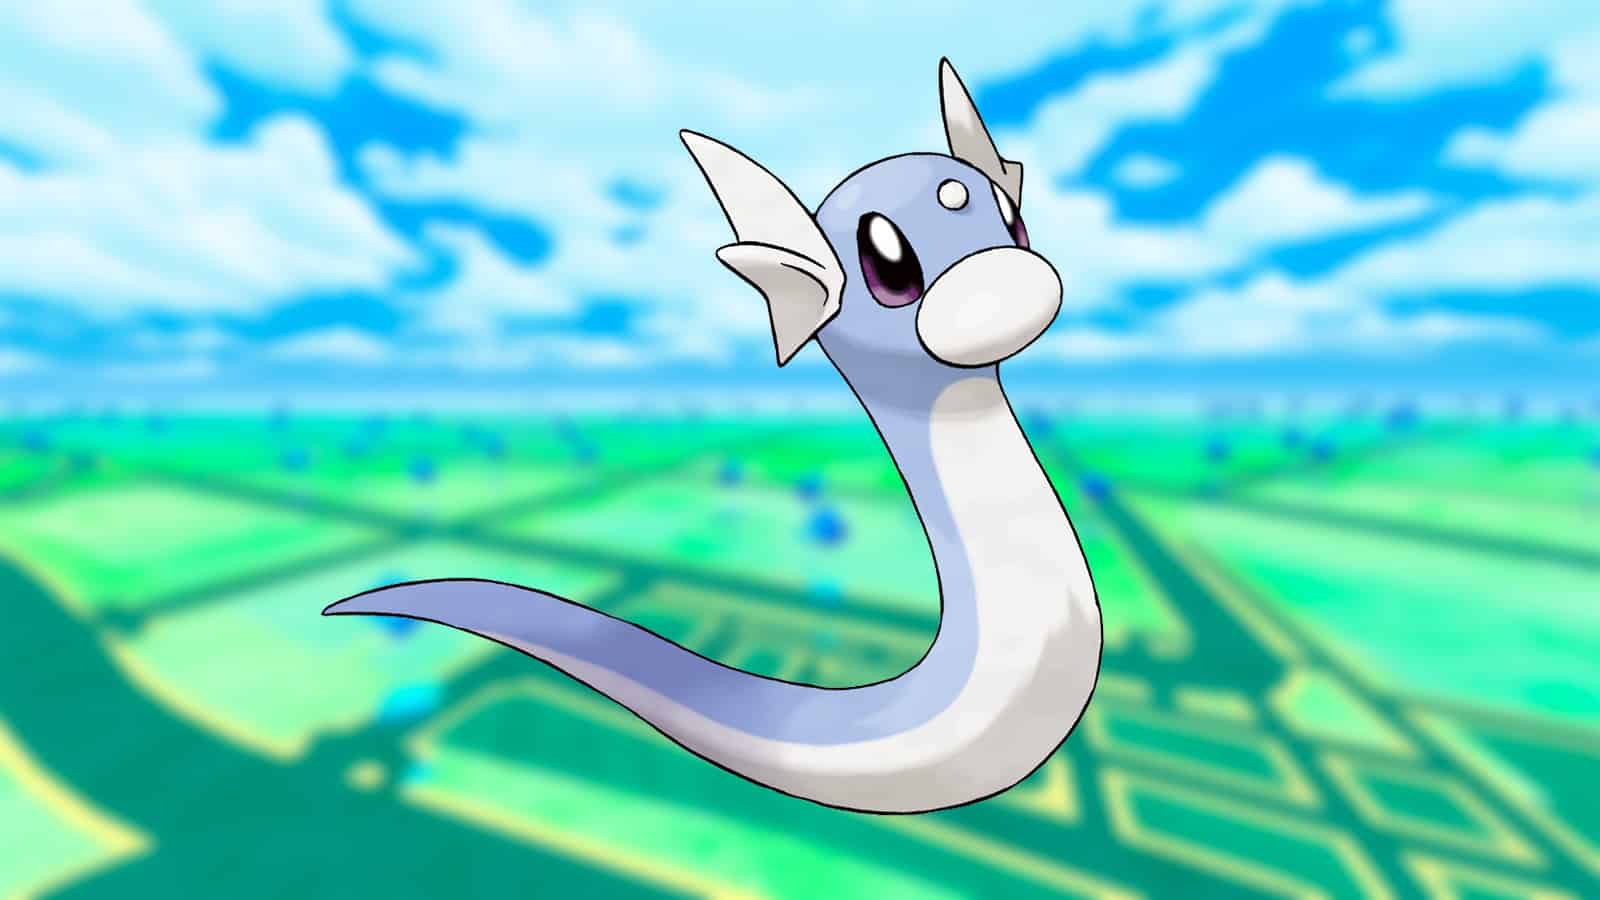 1 MINUTE COUNTERS for KARTANA (Pokémon GO) 